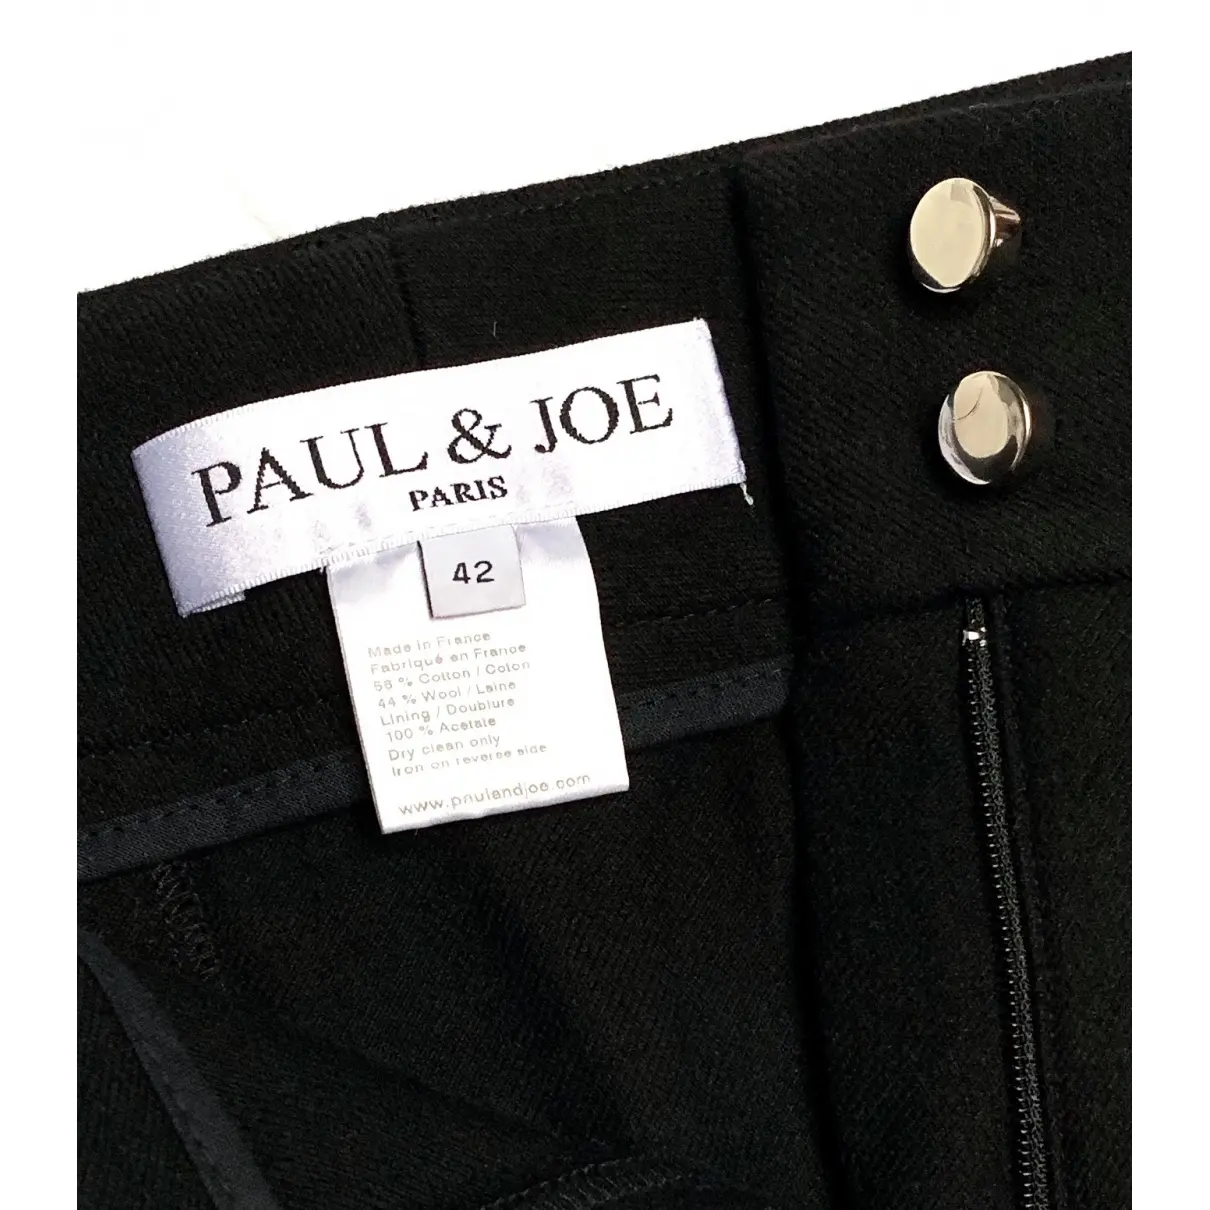 Buy Paul & Joe Skirt online